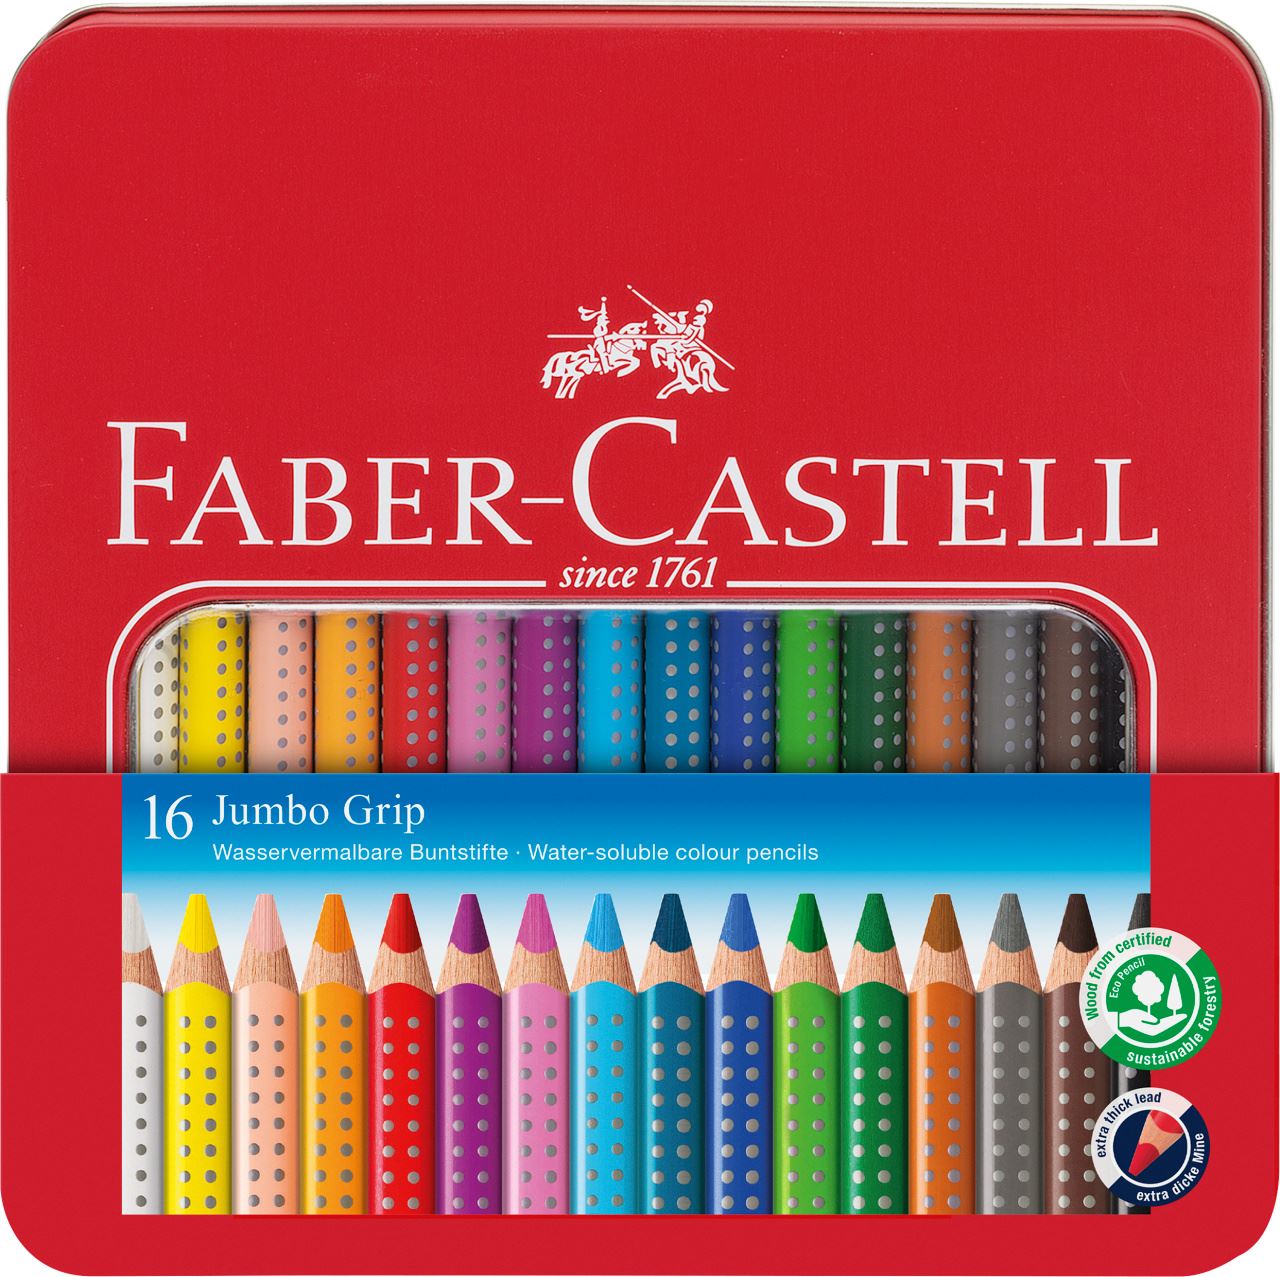 2 Stück 10er Kartonetui inklusive Spitzer Faber-Castell Buntstifte Jumbo